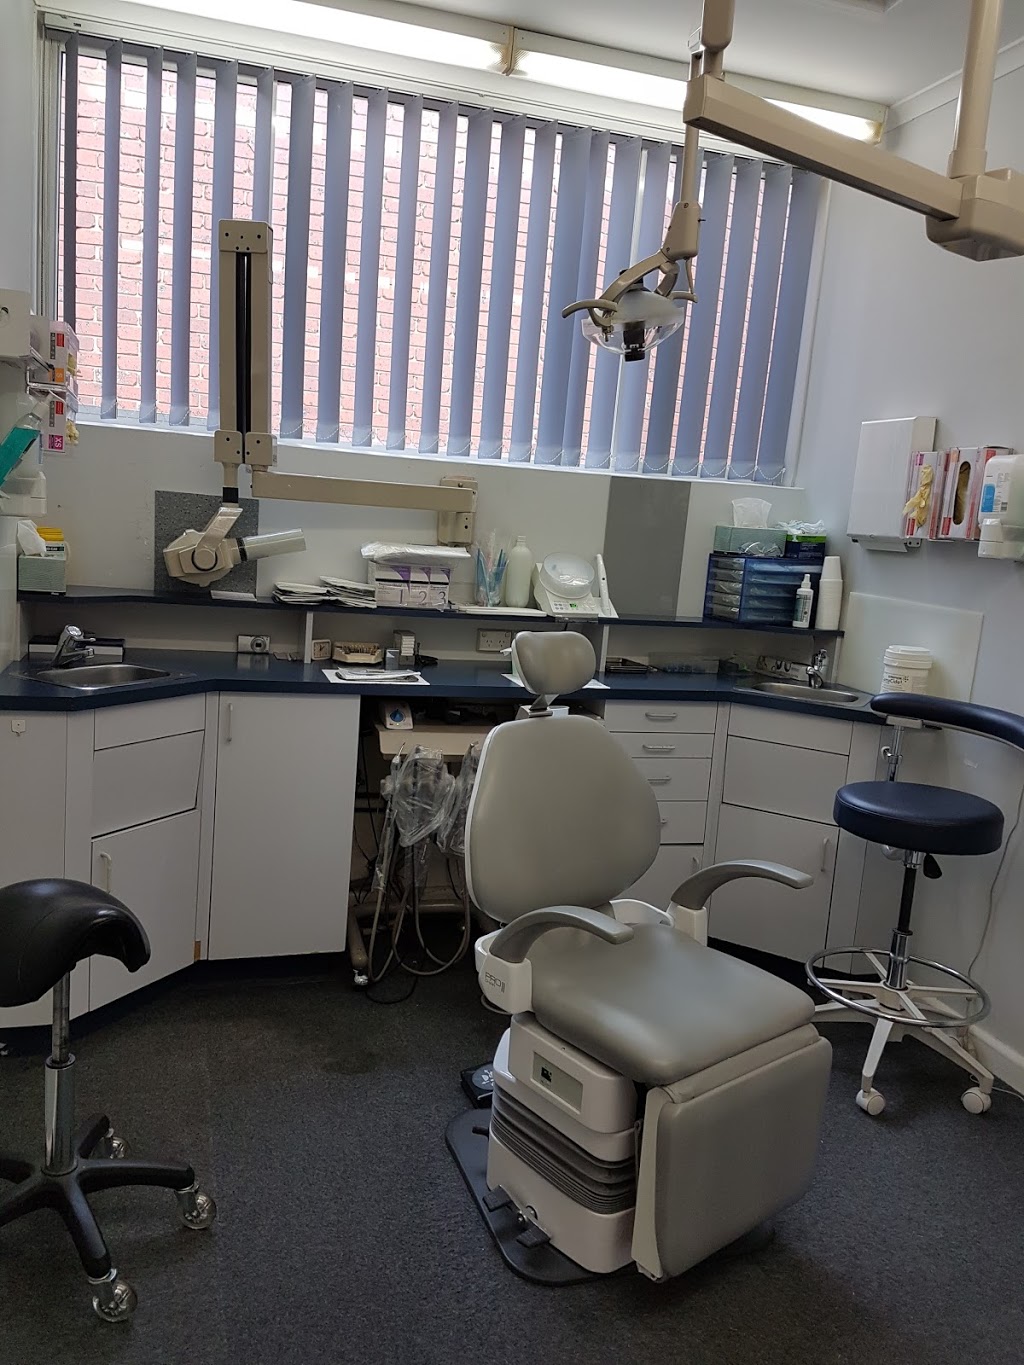 Crombie Dental Surgery Hampton | dentist | 495 Hampton St, Hampton VIC 3188, Australia | 0395983755 OR +61 3 9598 3755